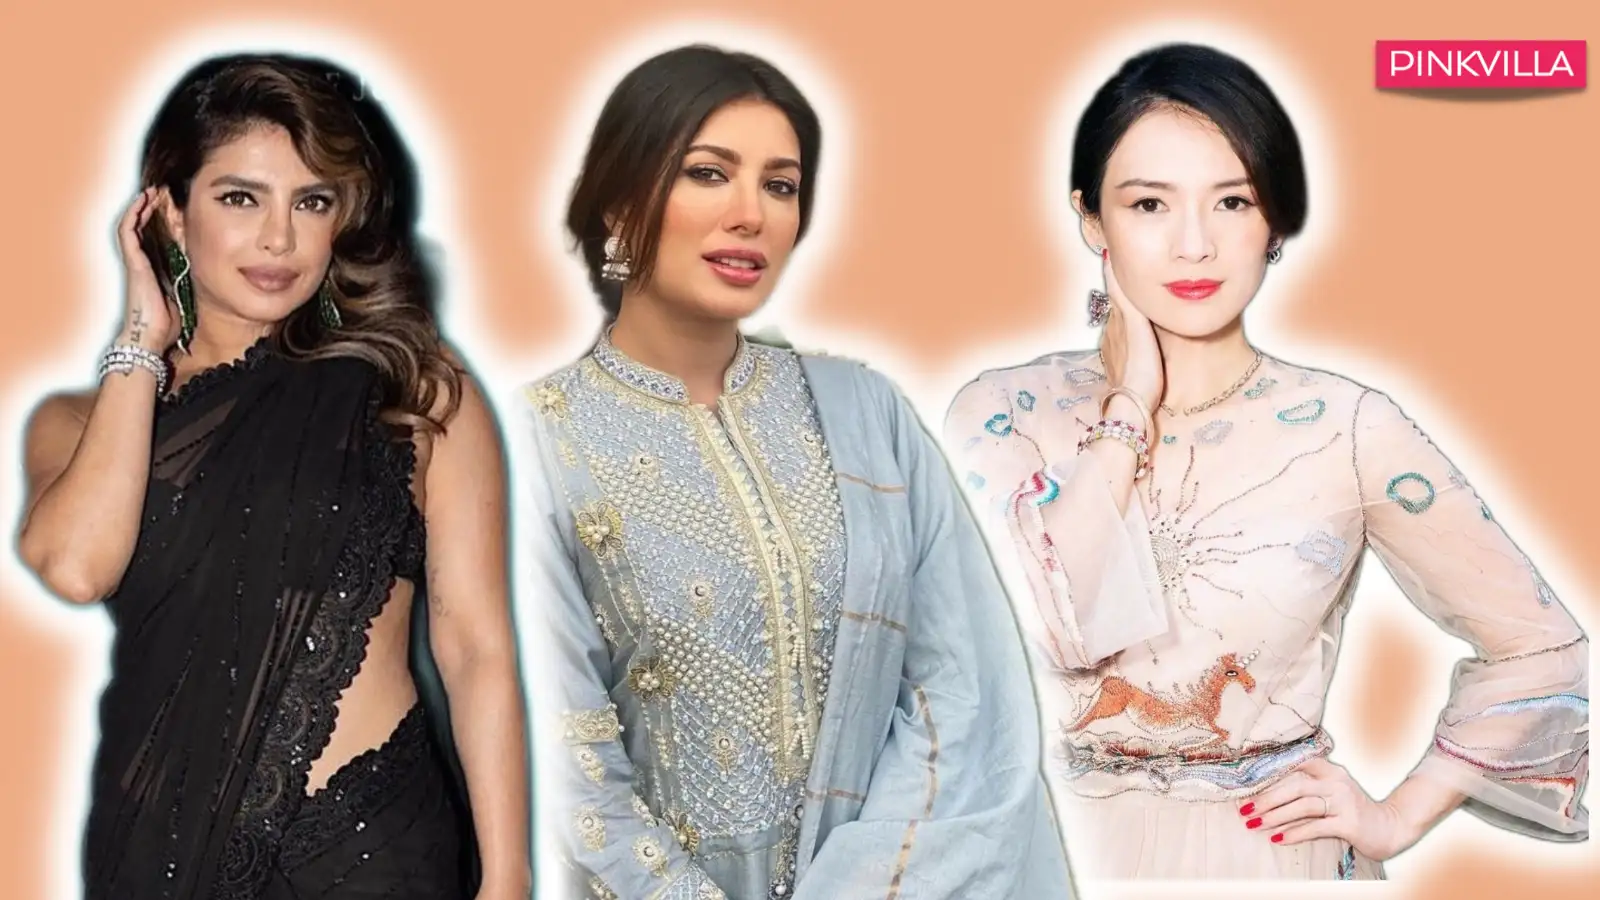 25 Most Beautiful Asian Women with Dazzling Personalities PINKVILLA image